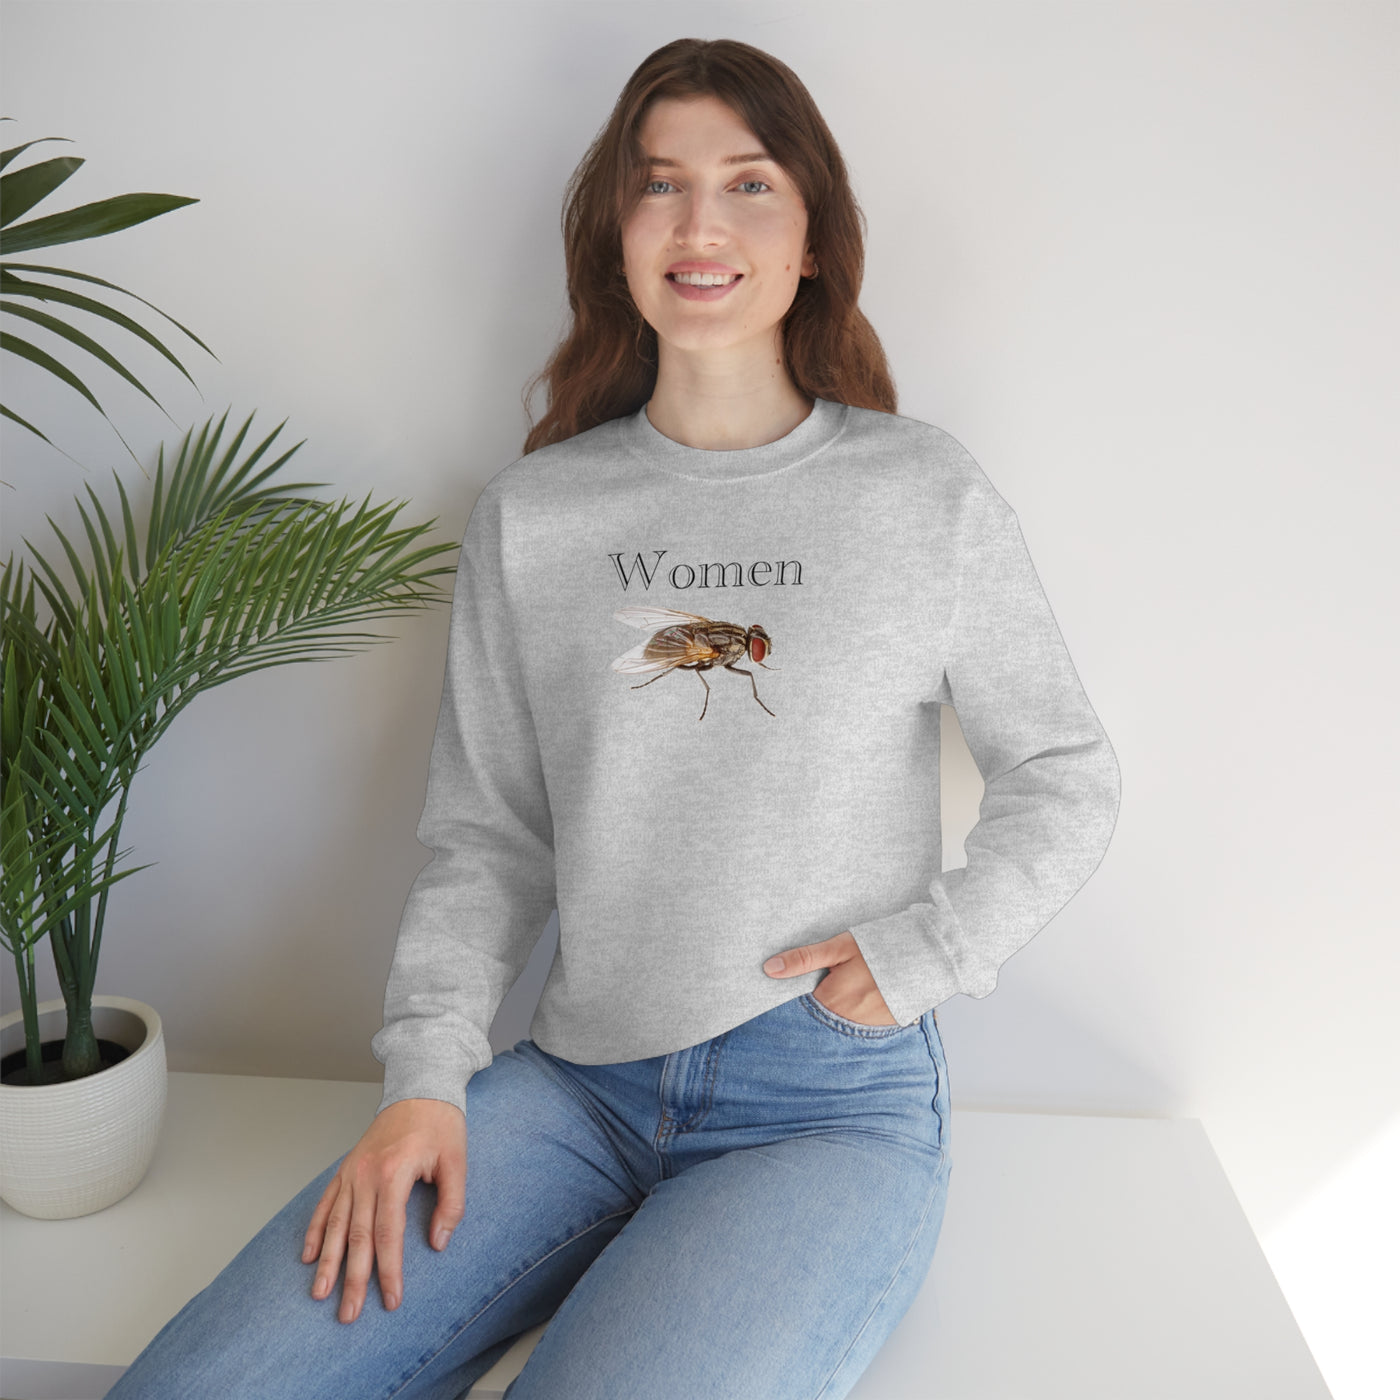 Women Fly Crewneck Sweatshirt